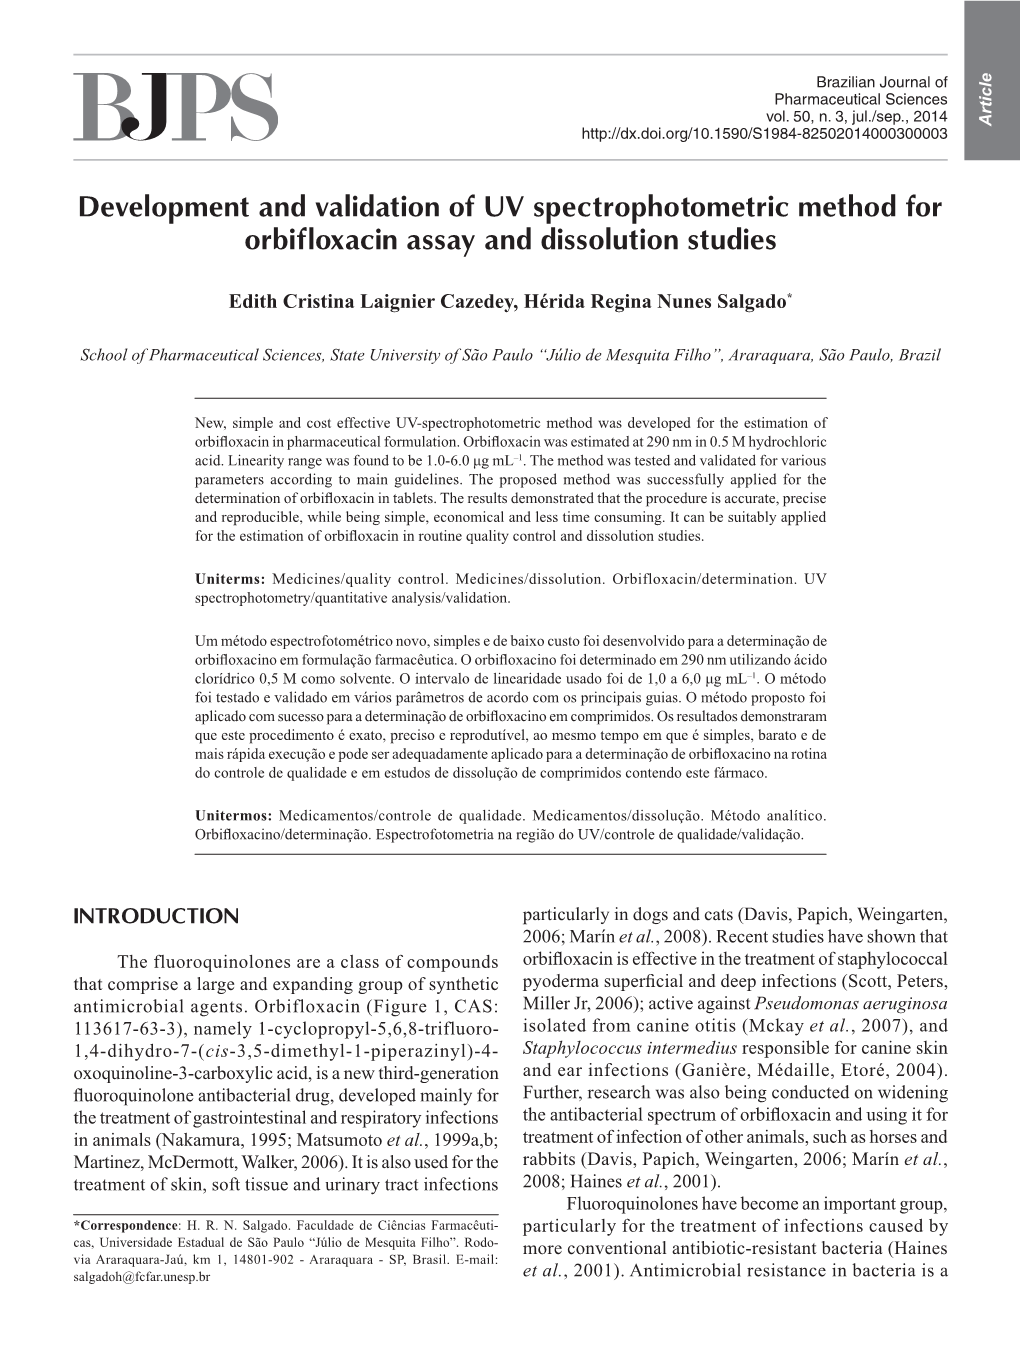 Development and Validation of UV Spectrophotometric Method for Orbifloxacin Assay and Dissolution Studies